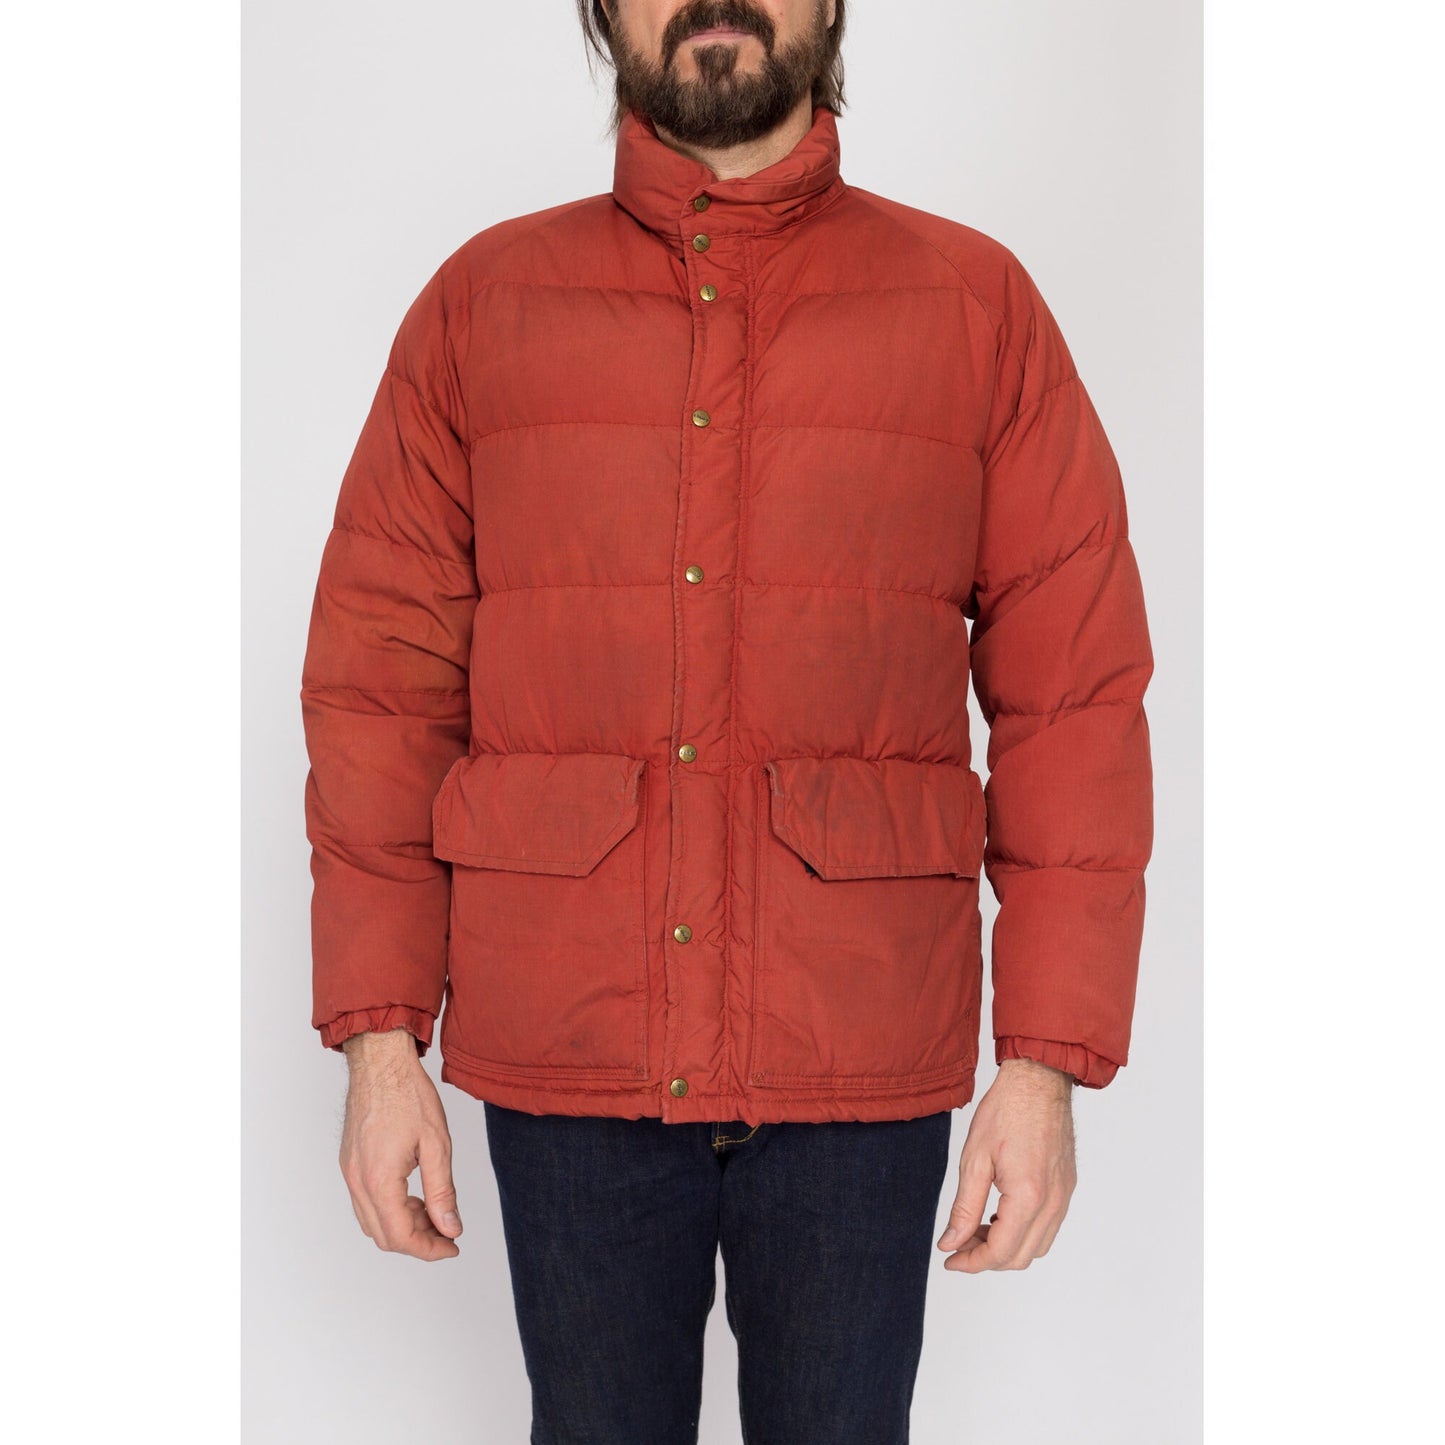 Medium 70s Rust Red Down Fill Puffer Winter Coat | Vintage Men's Zip Up Warm Puffy Ski Jacket